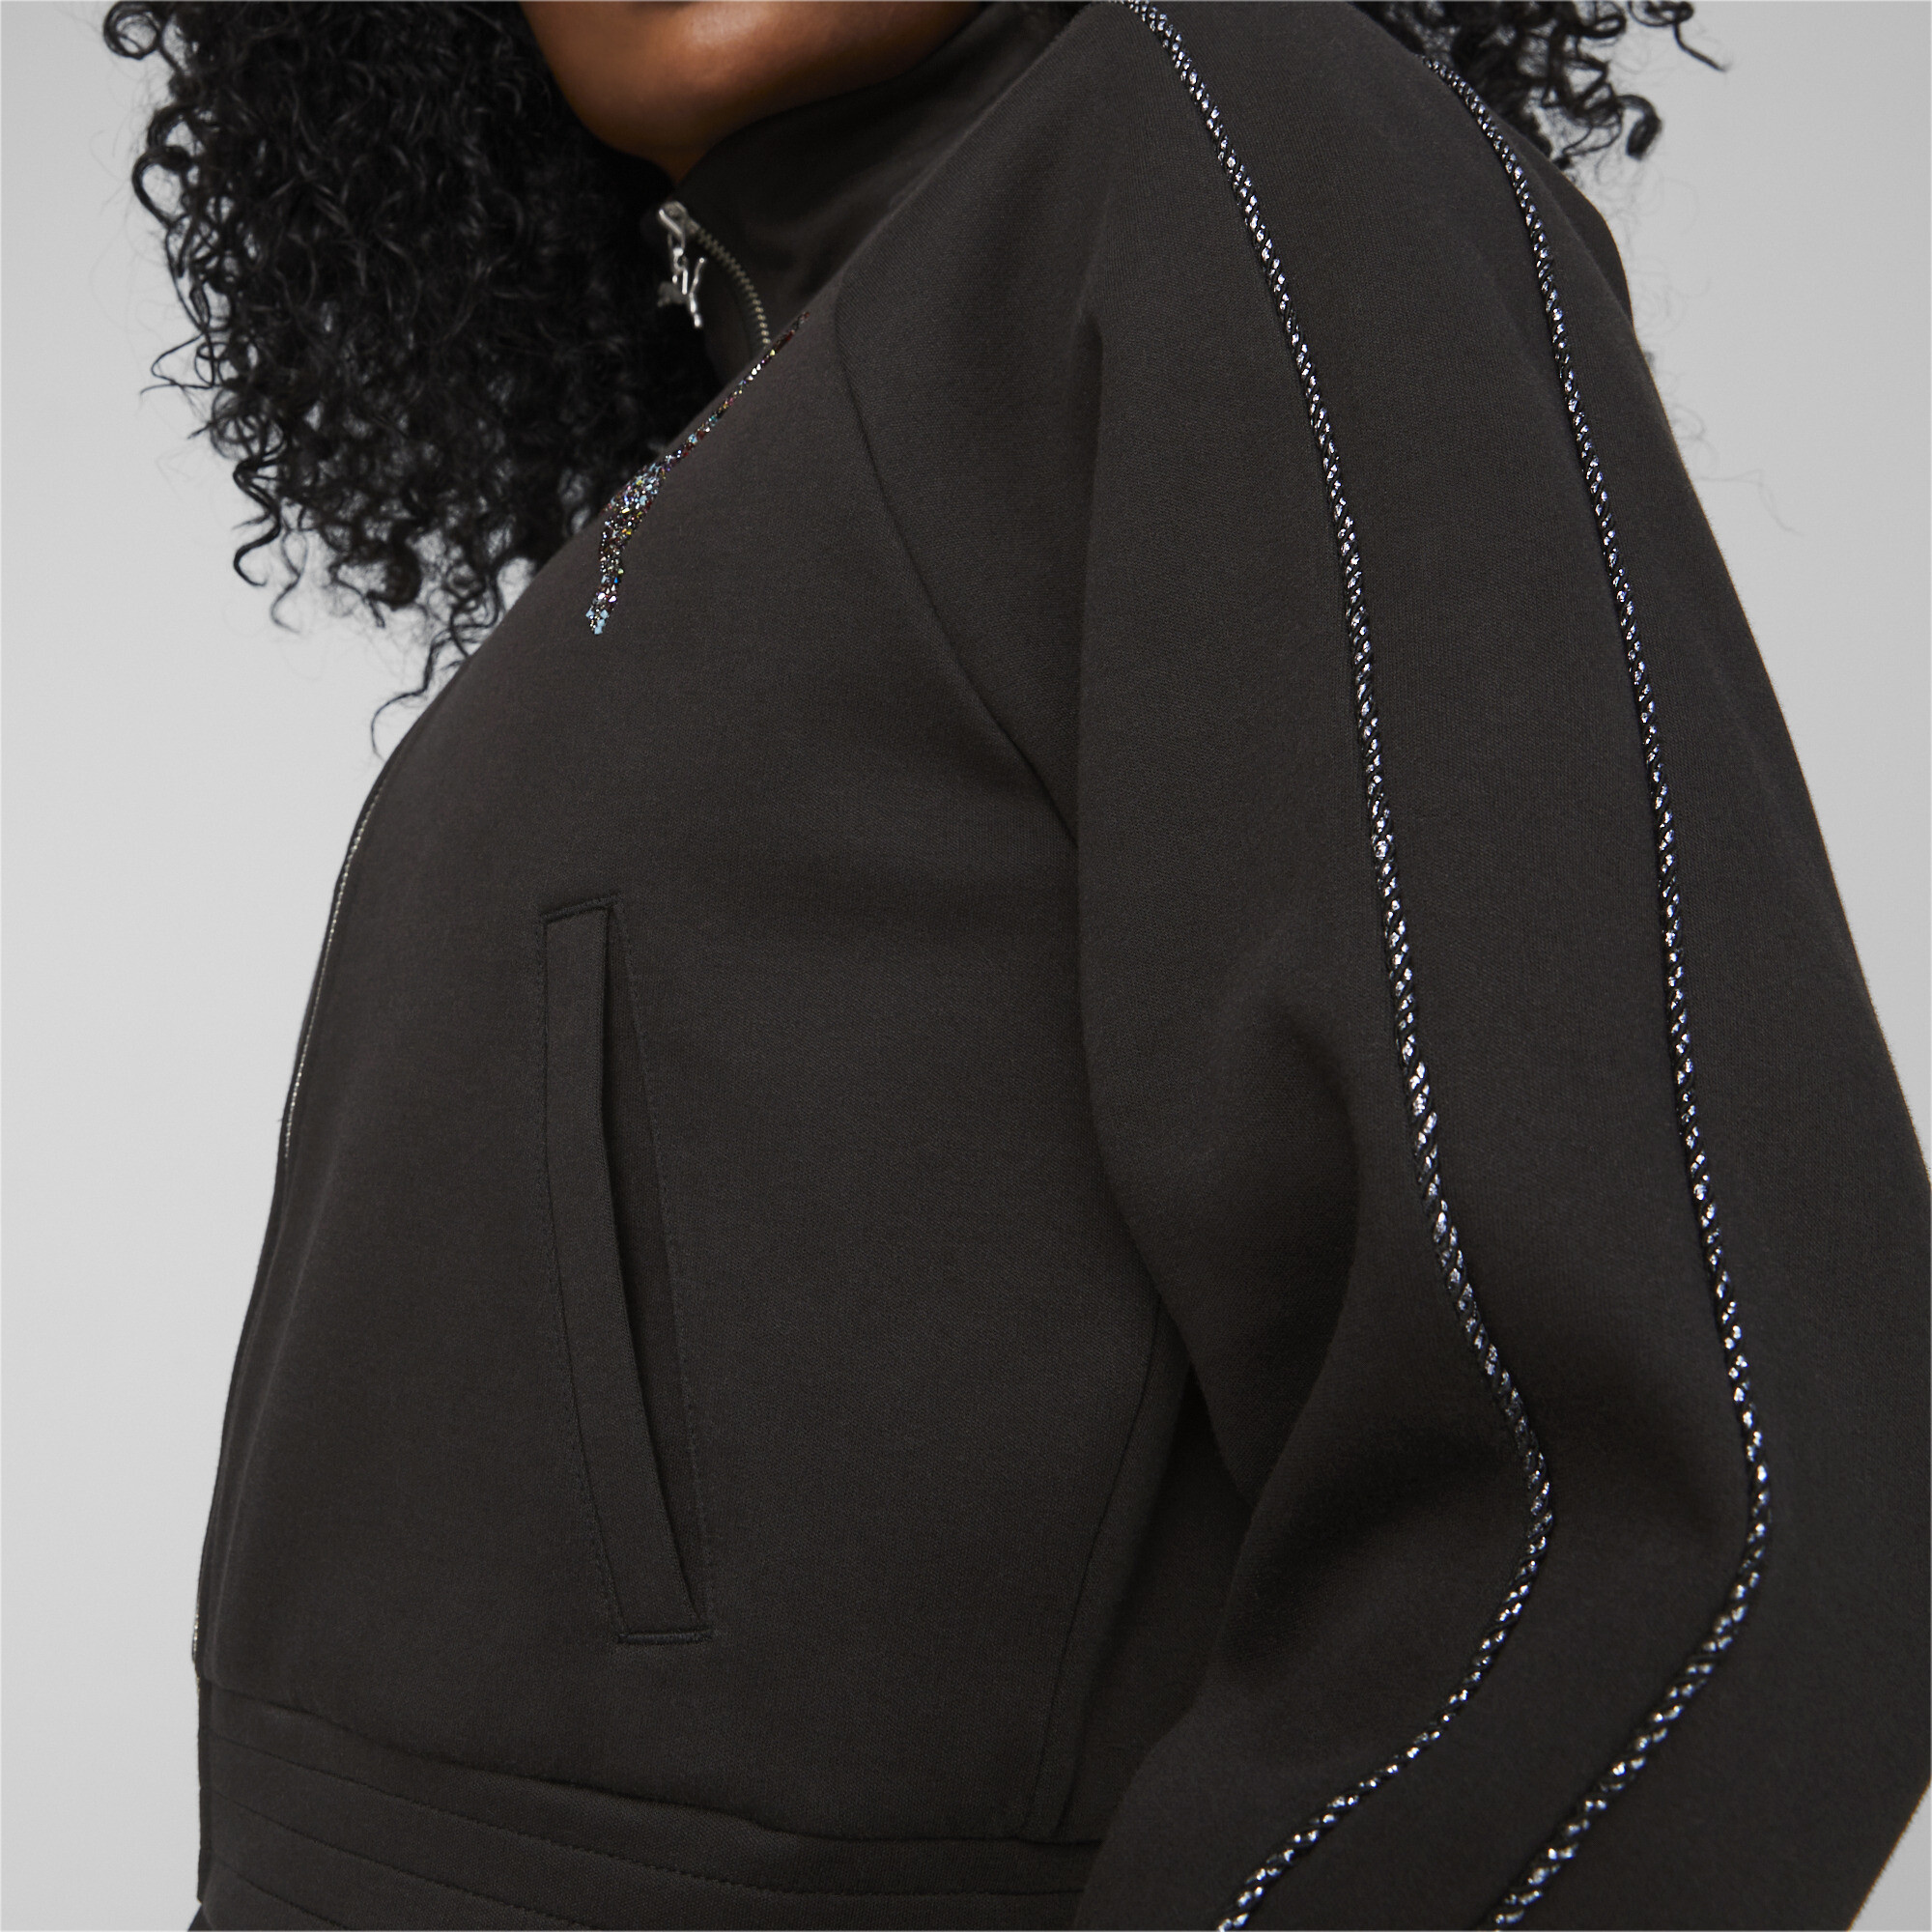 Women's PUMA Swarovski Crystals T7 Track Jacket In Black, Size Small